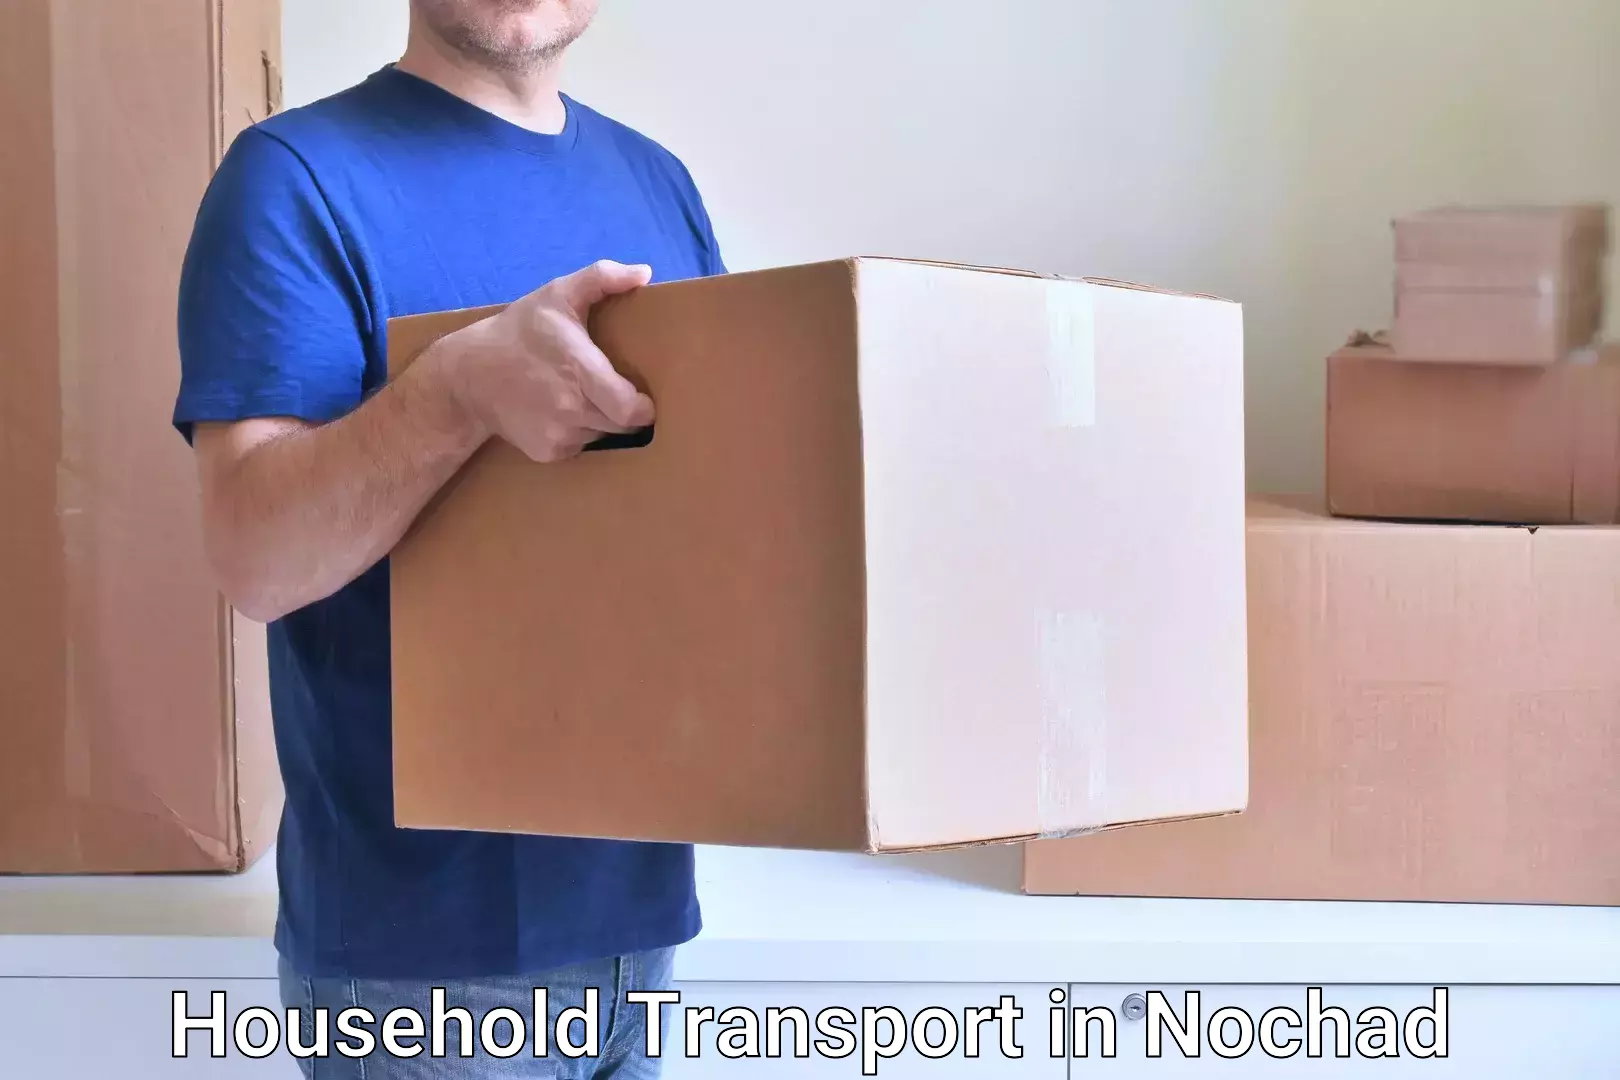 Furniture transport company in Nochad